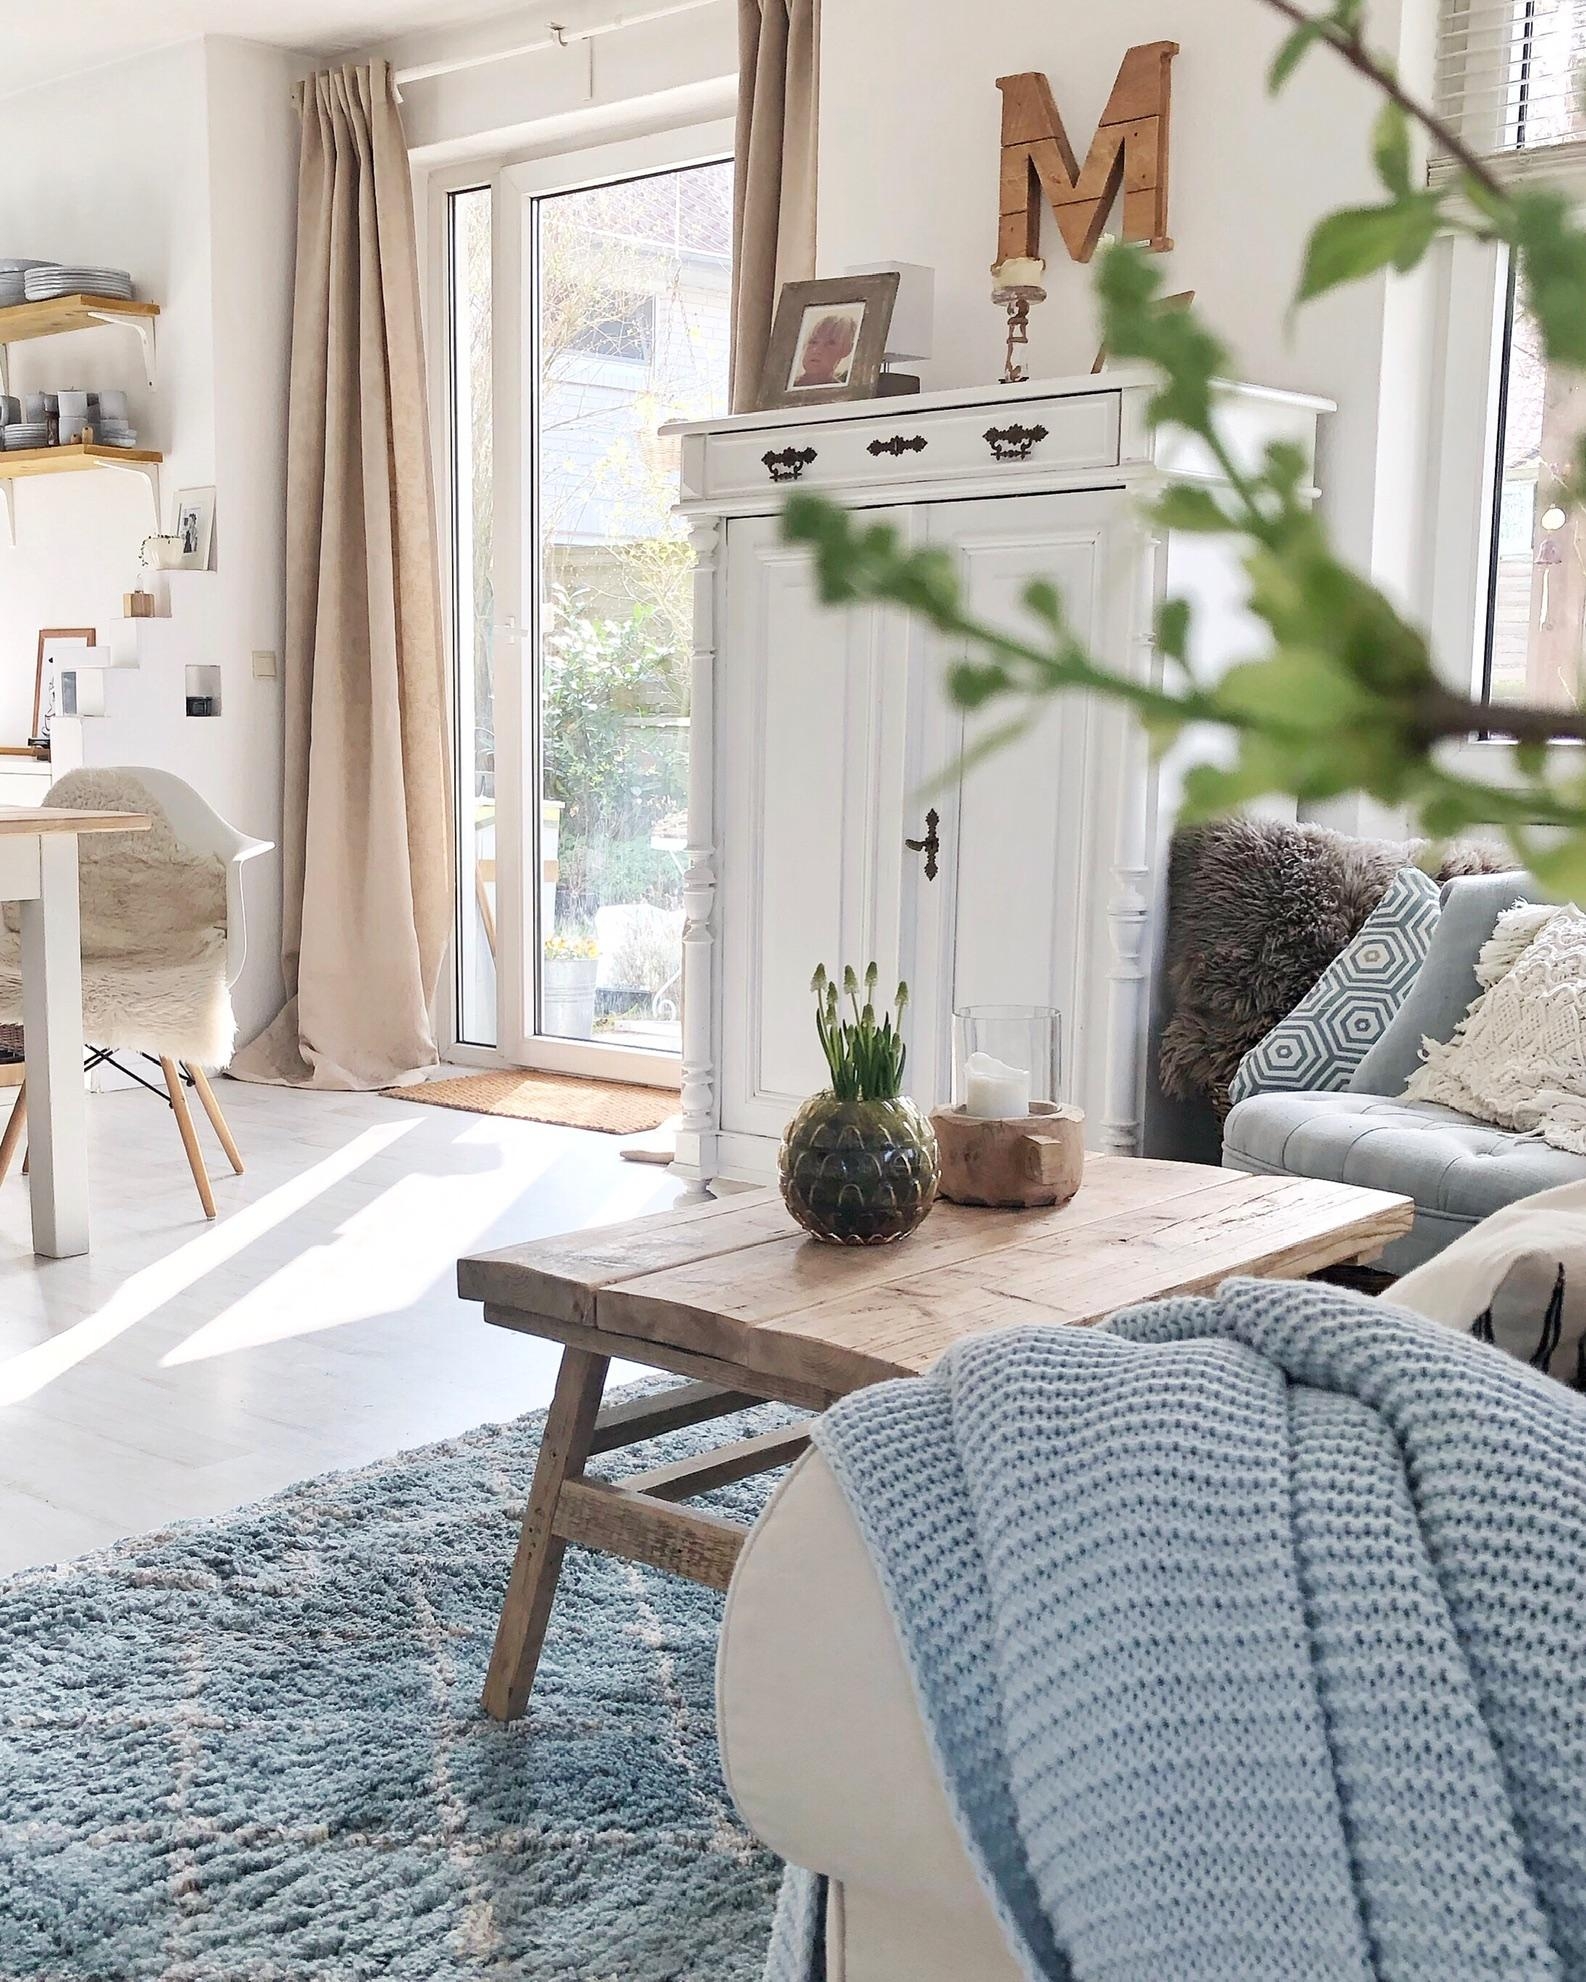 Sundaymood 
#interior#livingroom#blue#couchstyle#springtime